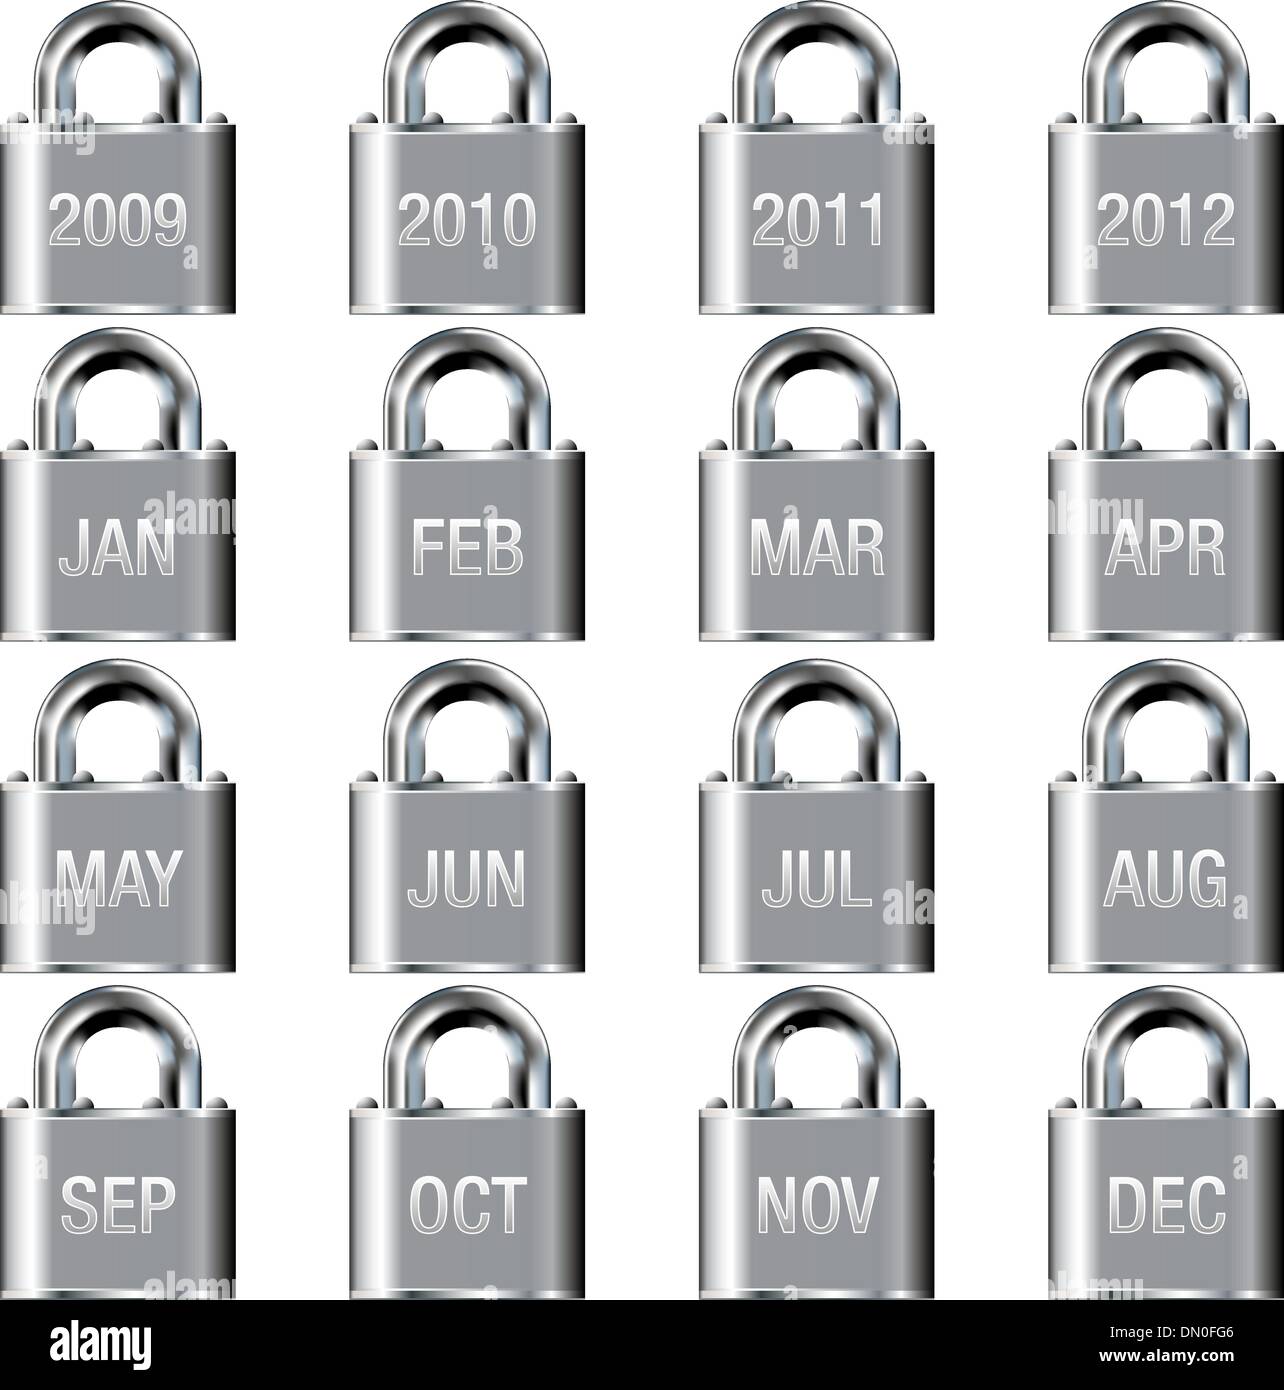 Secure calendar icons Stock Vector